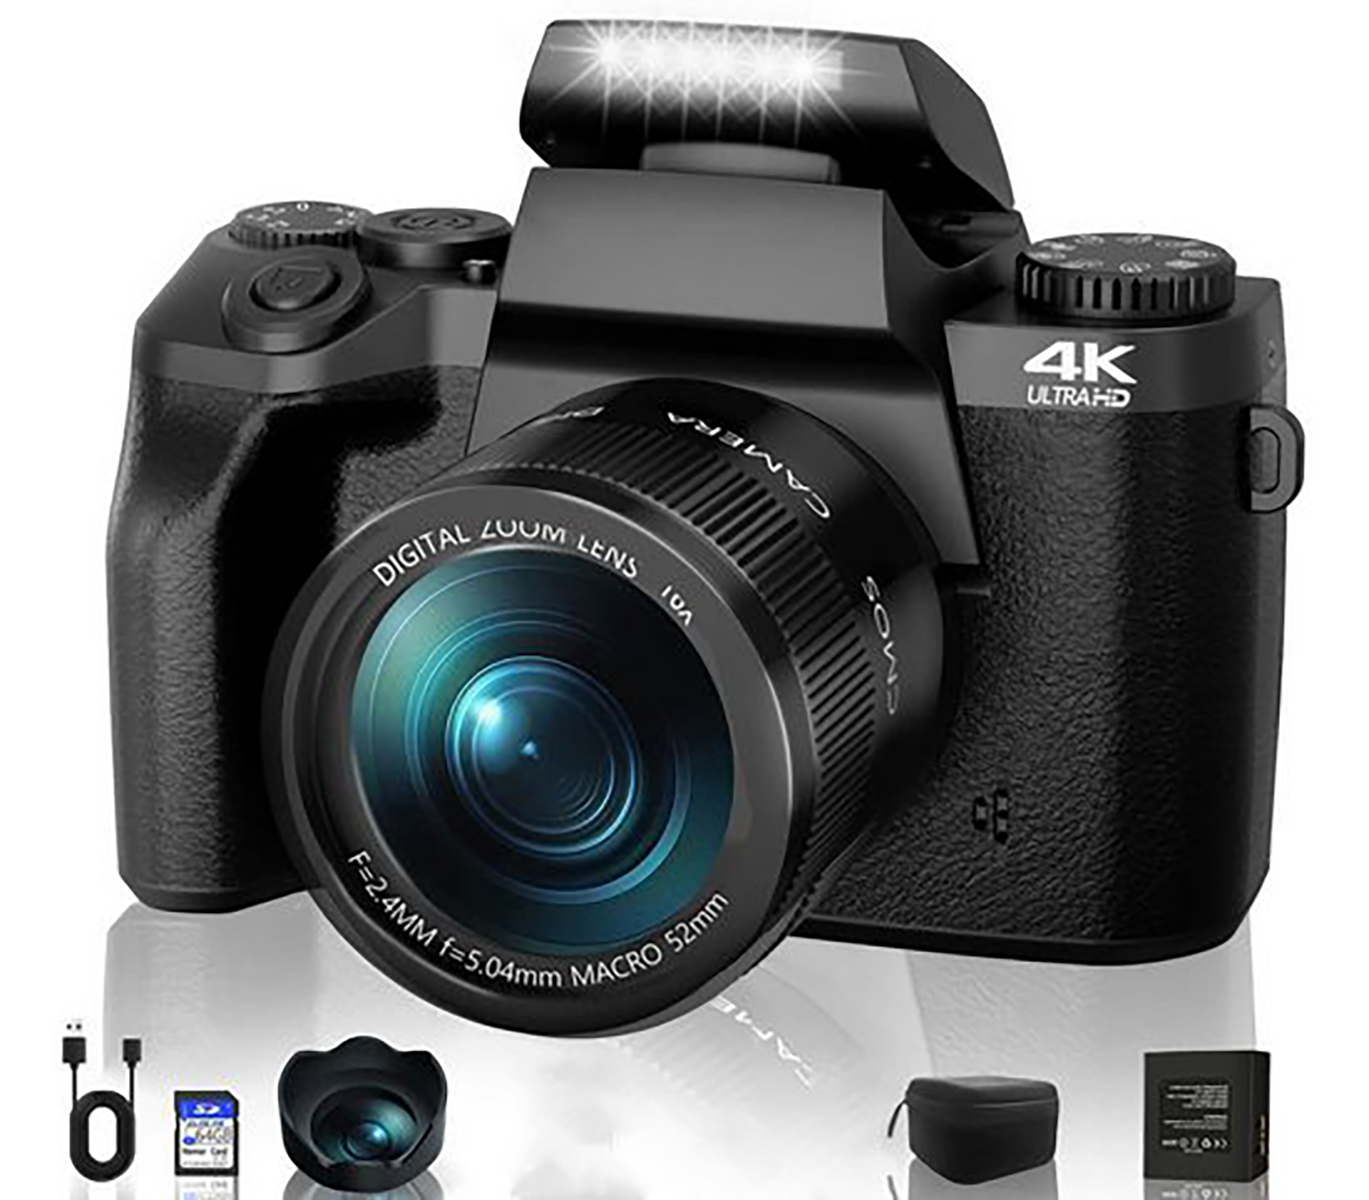 Doppelkamera Digital Schwarz, inkl.52mm Kamera MP, SD-Karte&Kameratasche 4-Zoll-HD-IPS-Display- 64 Festobjektiv,4.0\